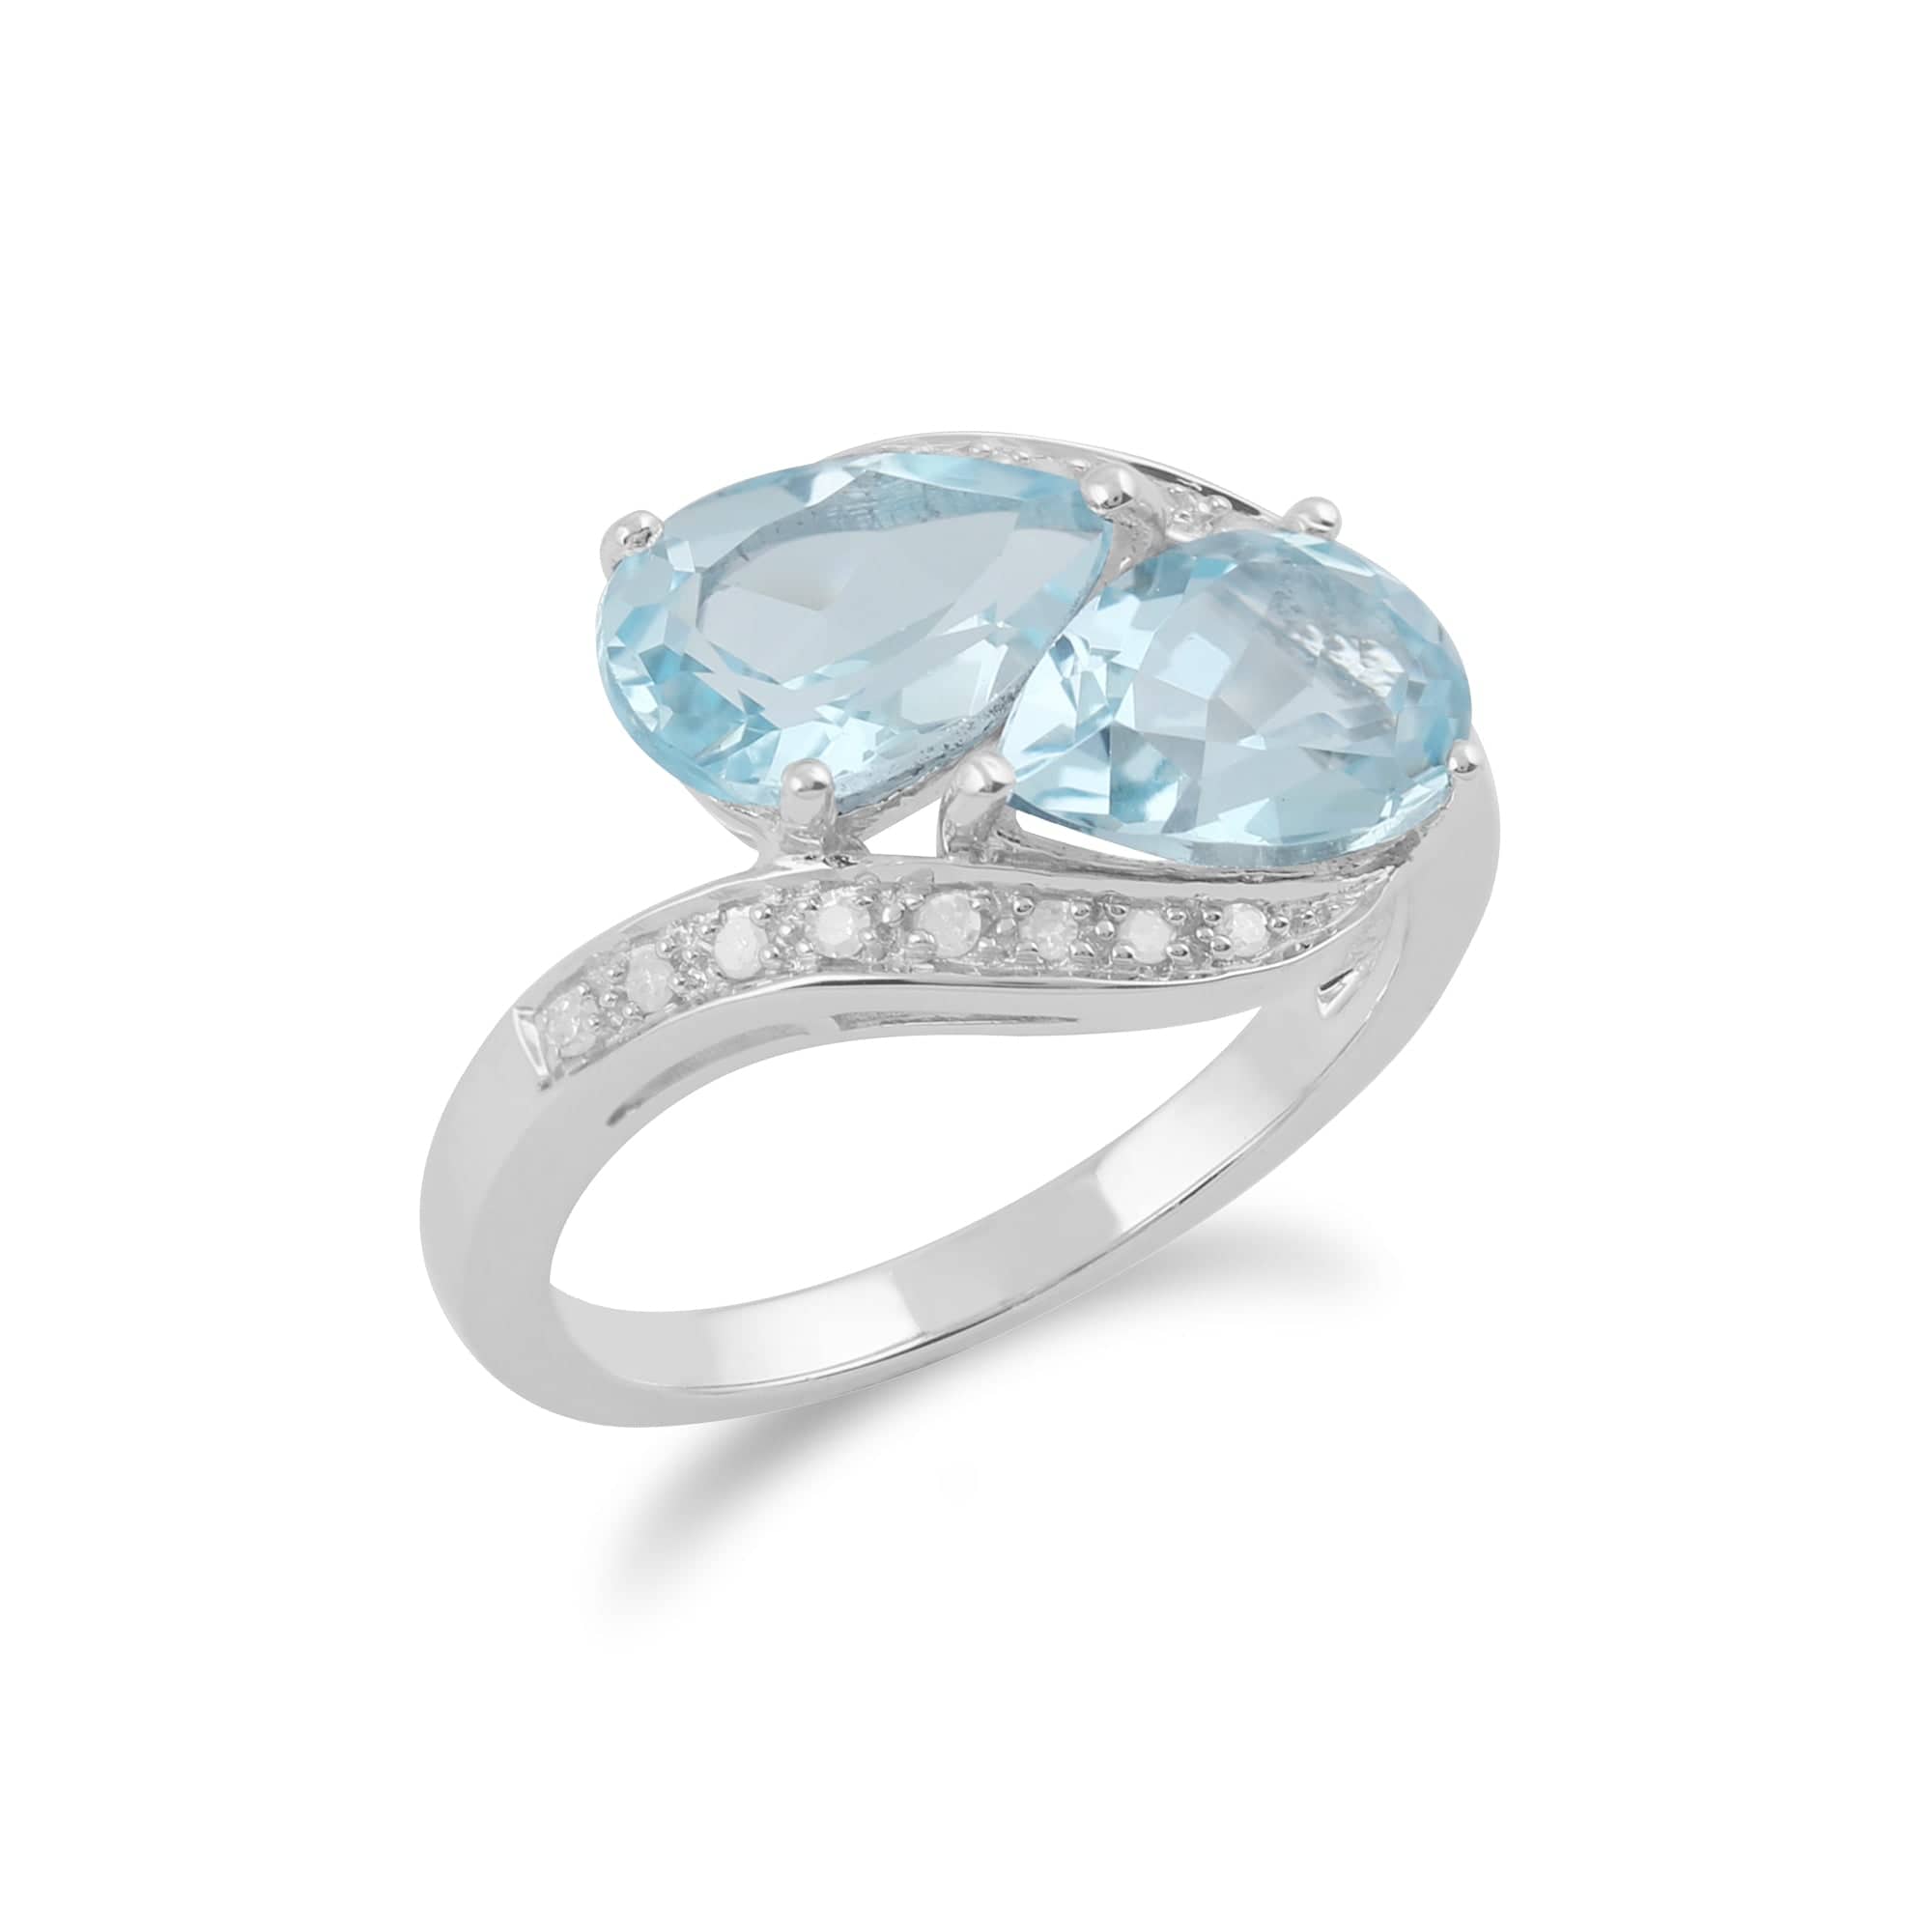 Gemondo 9ct White Gold 3.15ct Blue Topaz & Diamond Ring Image 2